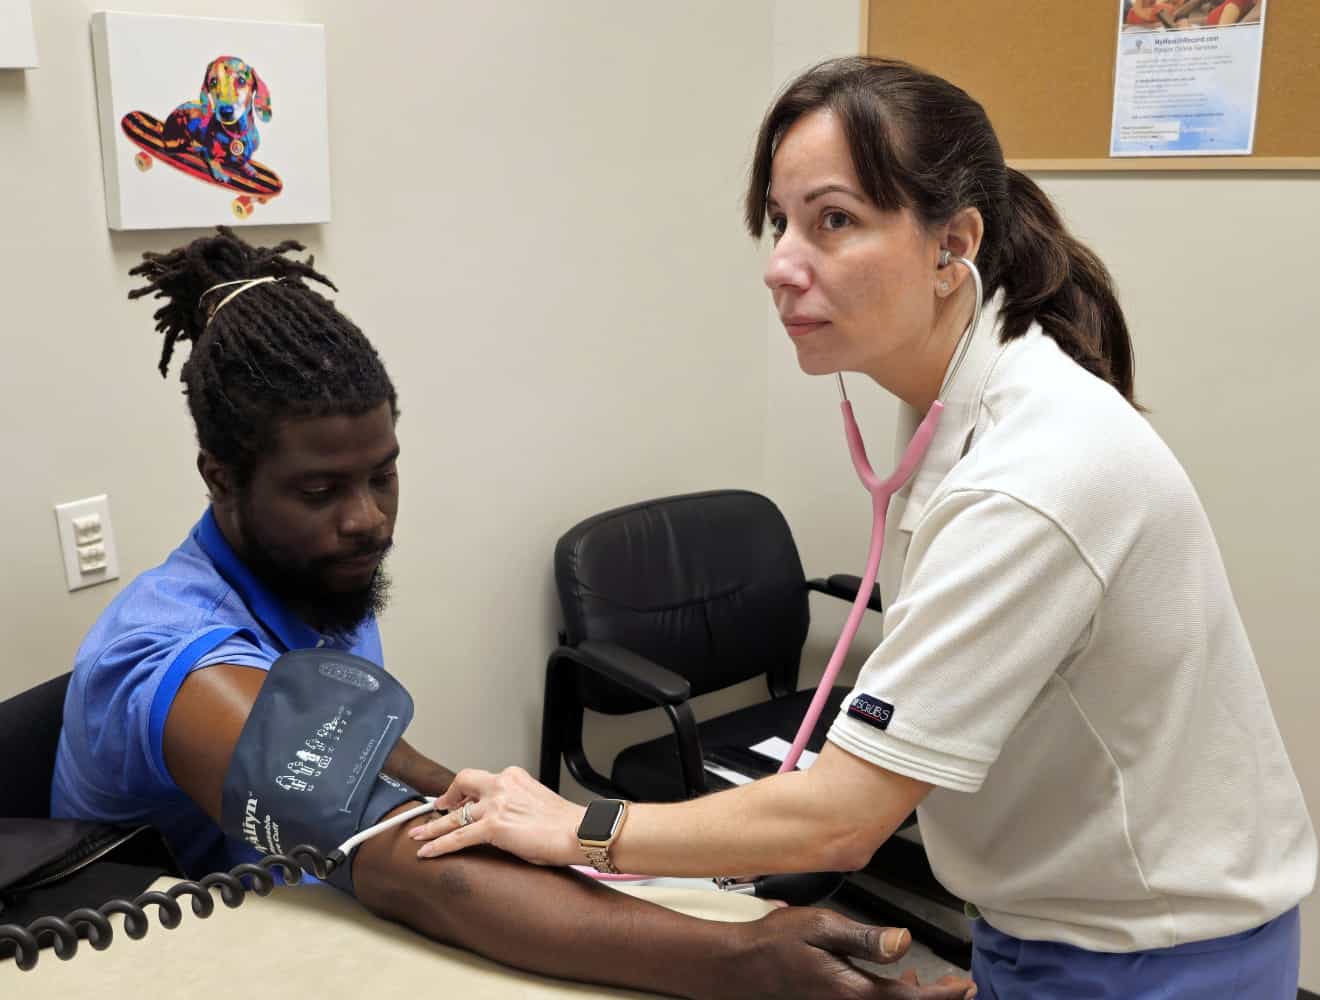 Nurse Taking Blood Pressure